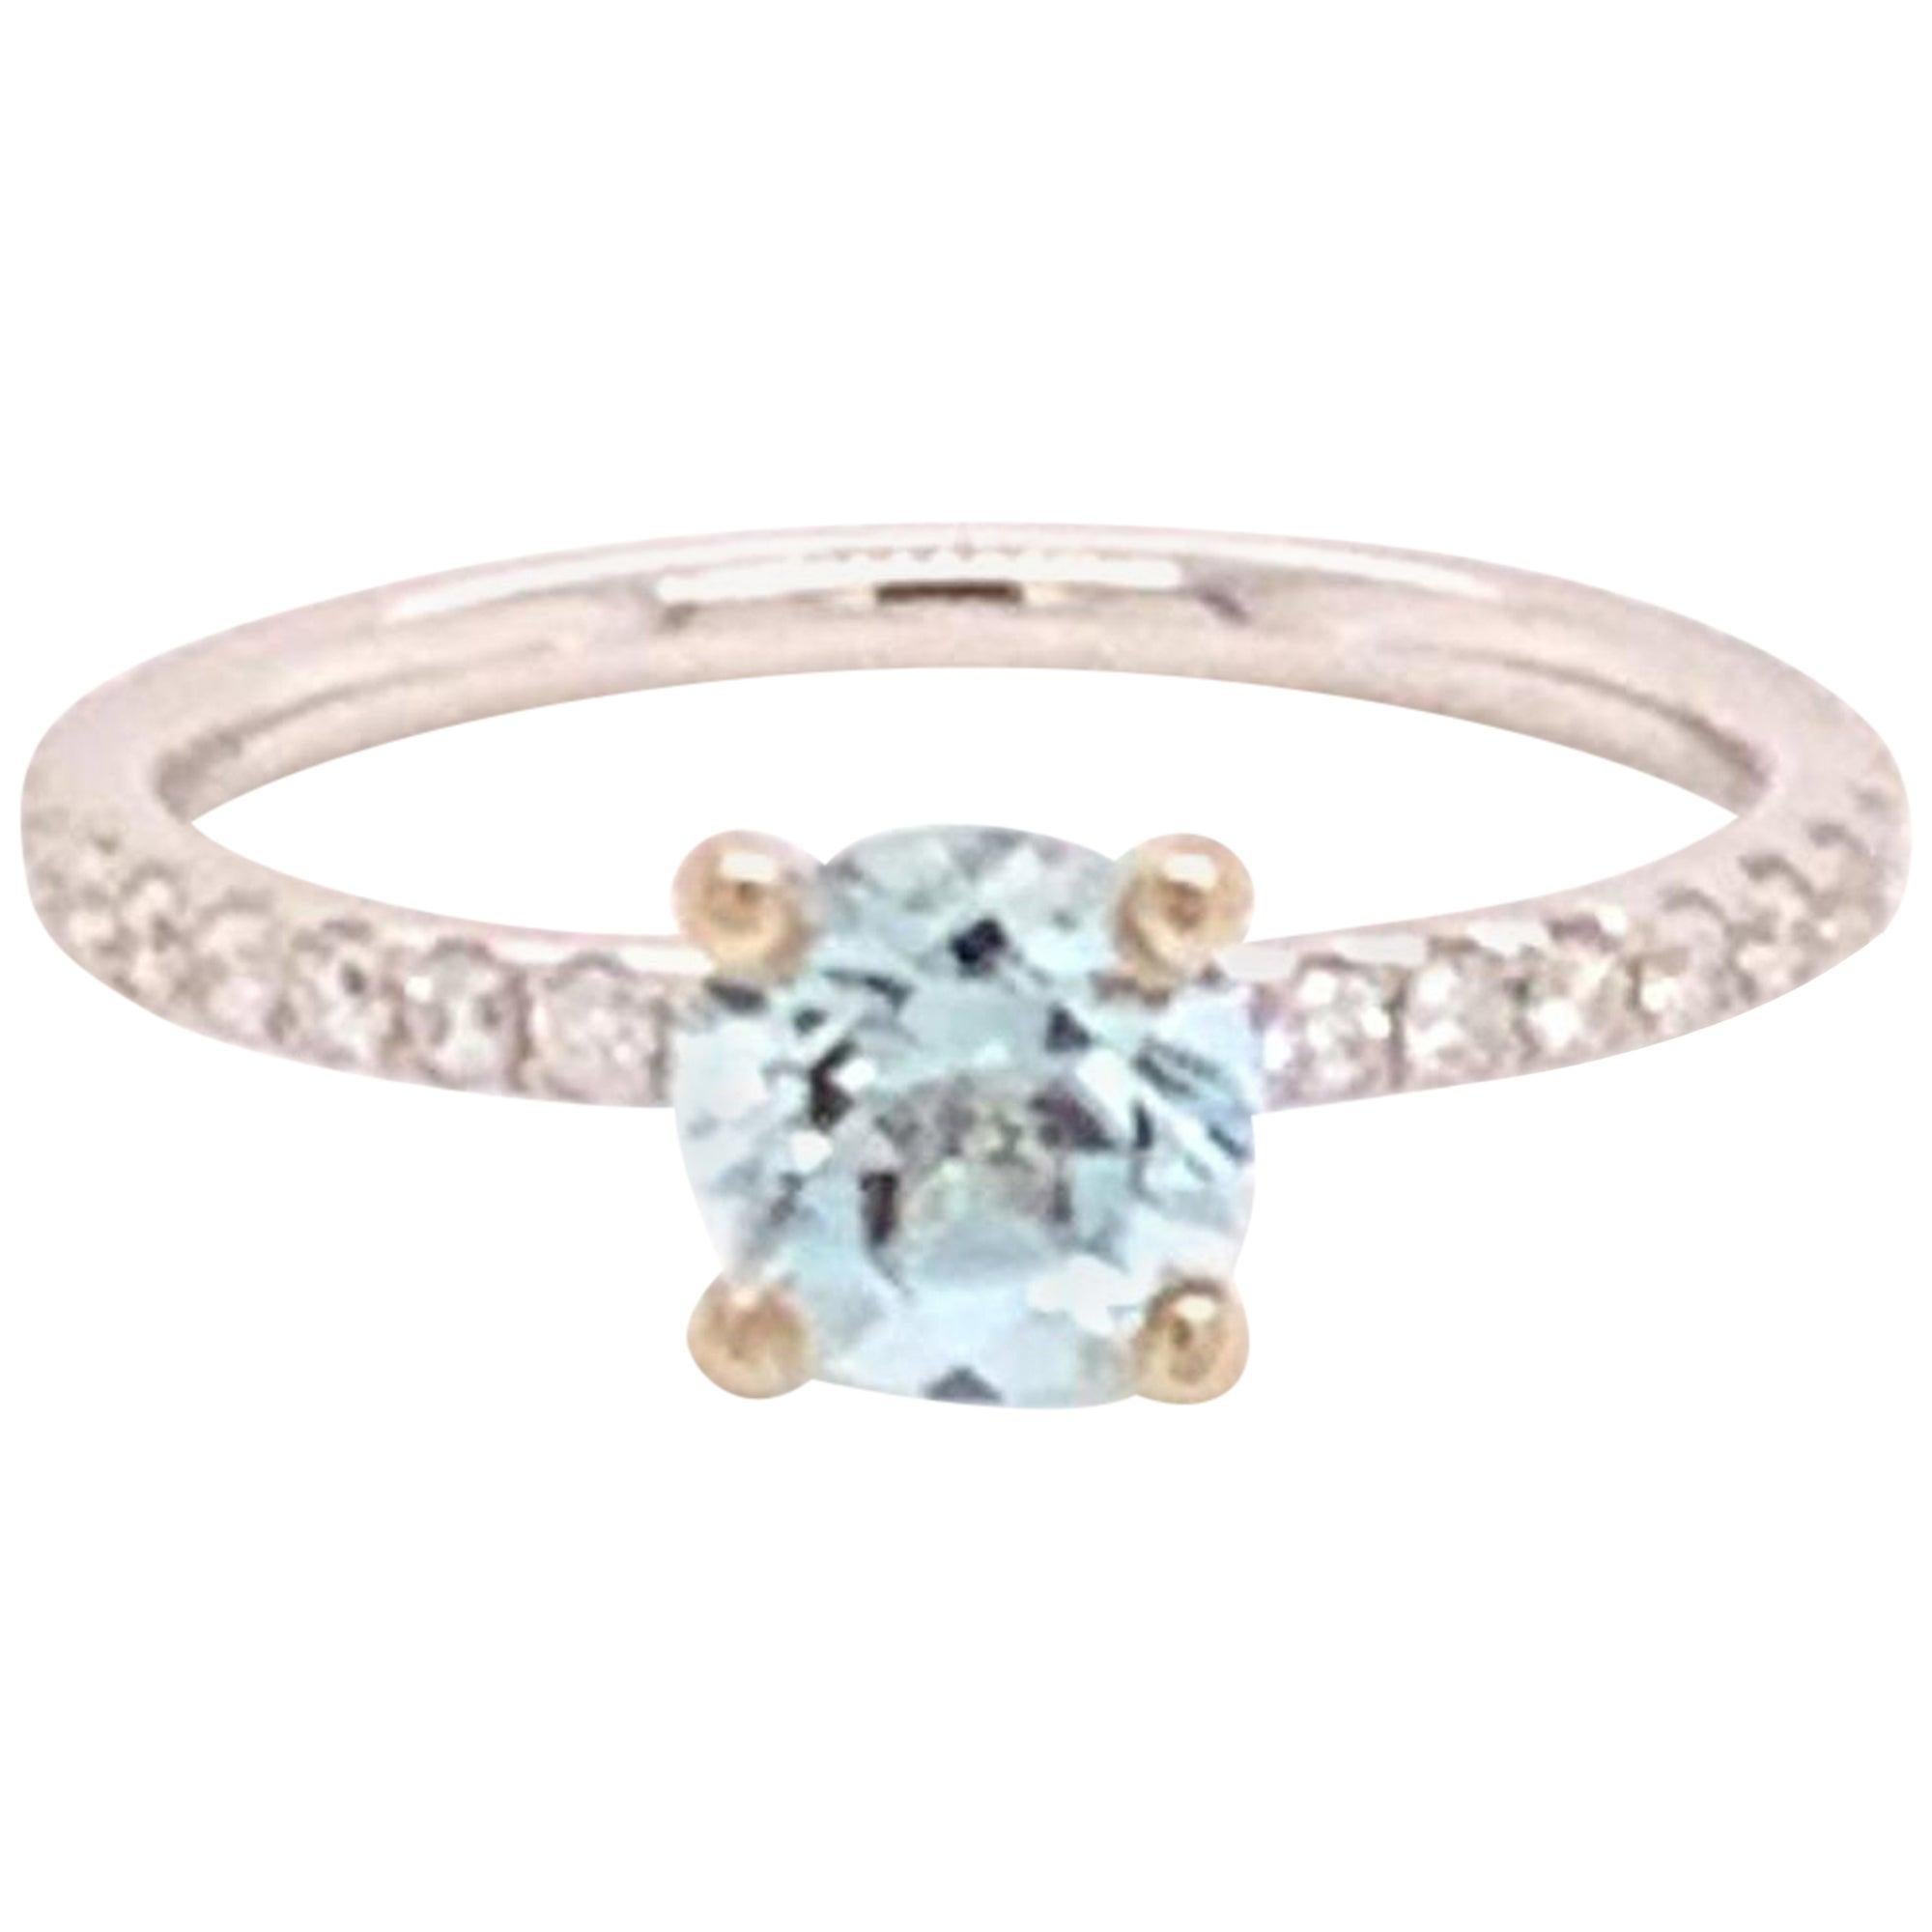 Diamond Aquamarine Ring 18k White Gold 1.08 TCW Certified